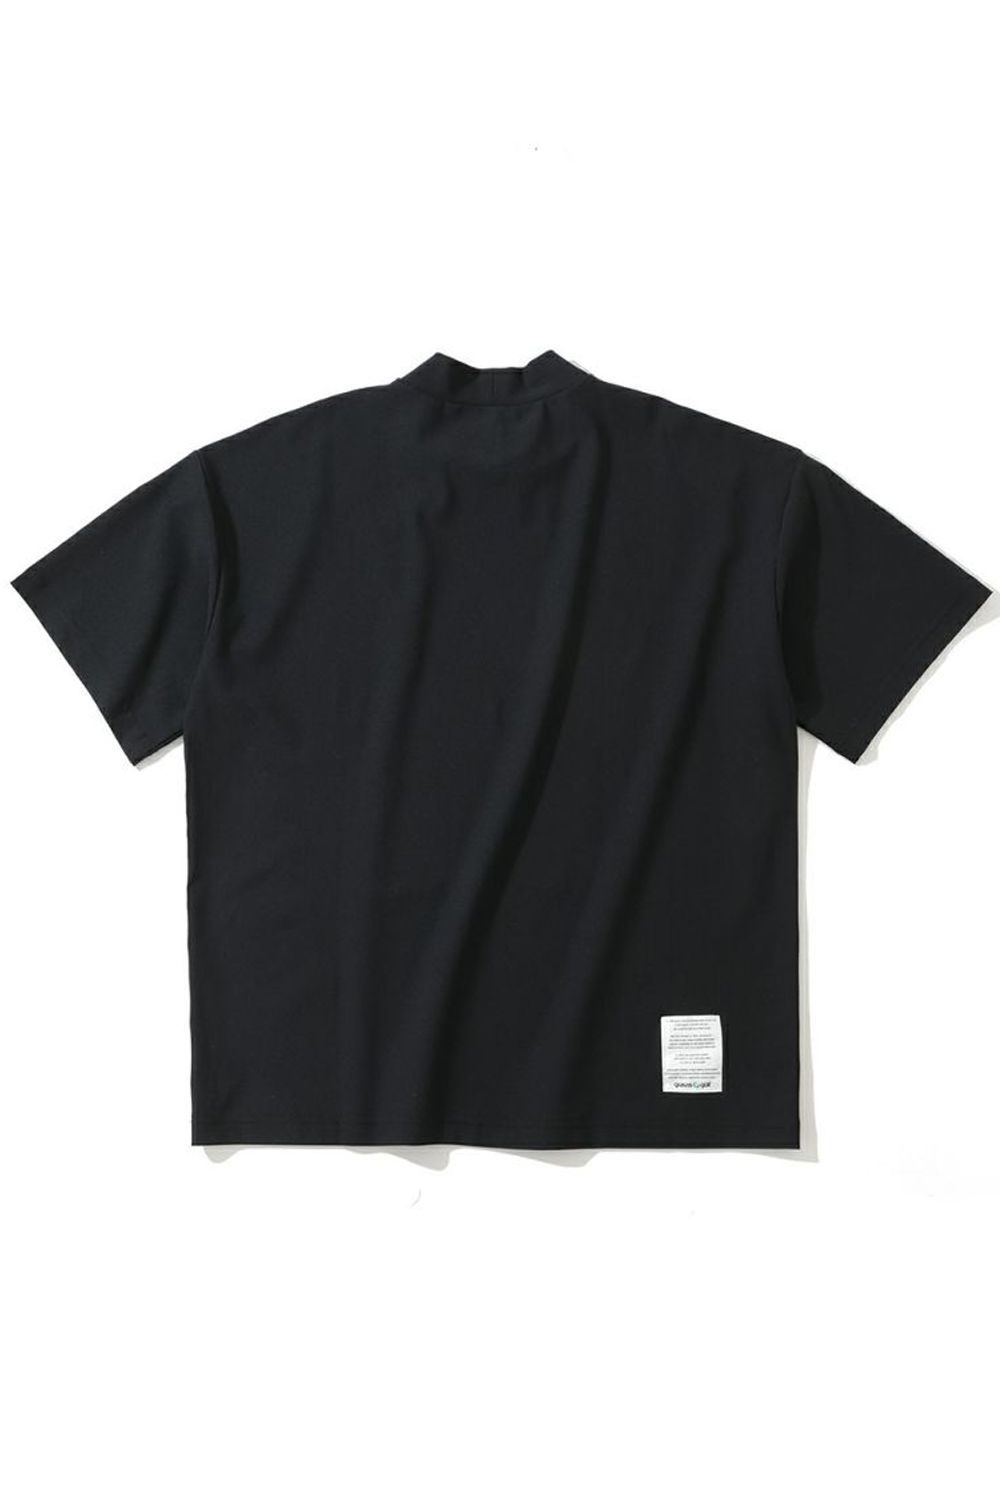 G-ICON MOCK NECK TOP / ハイテンション素材 ブランドロゴ オーバーサイズ モックネックTシャツ ブラック - 44(S)